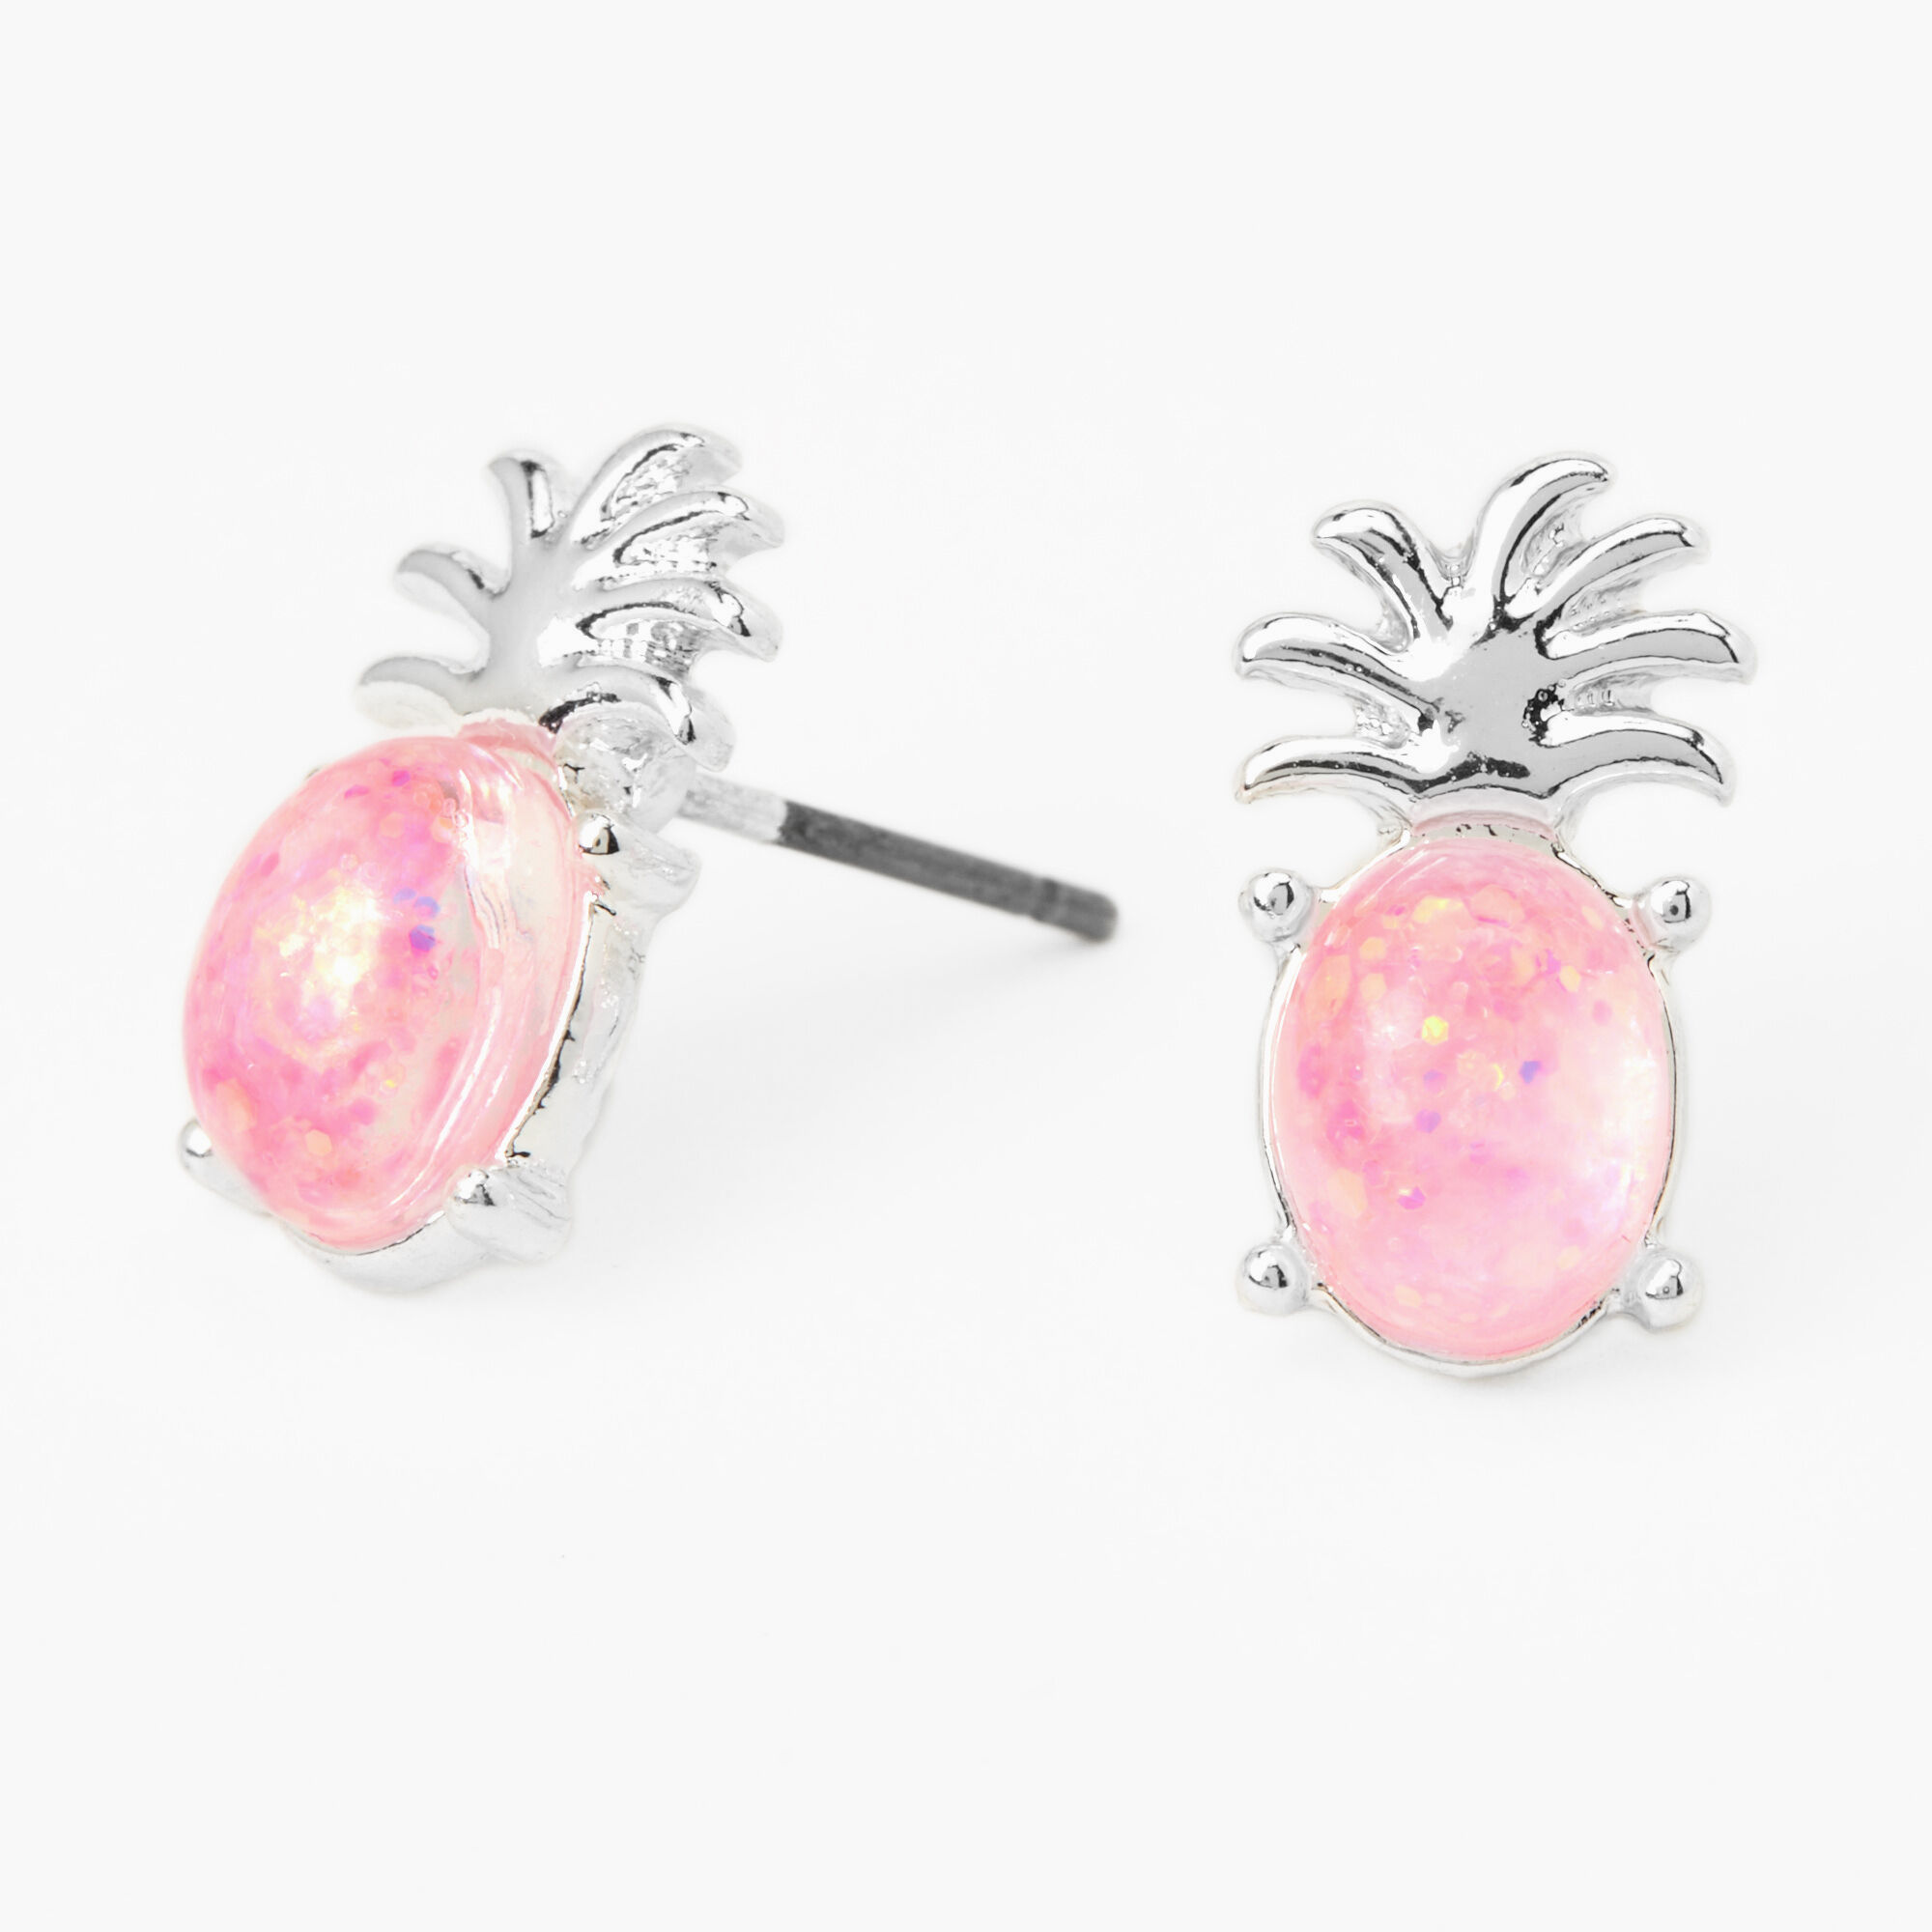 Upside Down Pineapple Earrings With a Baby Pink Tassel 